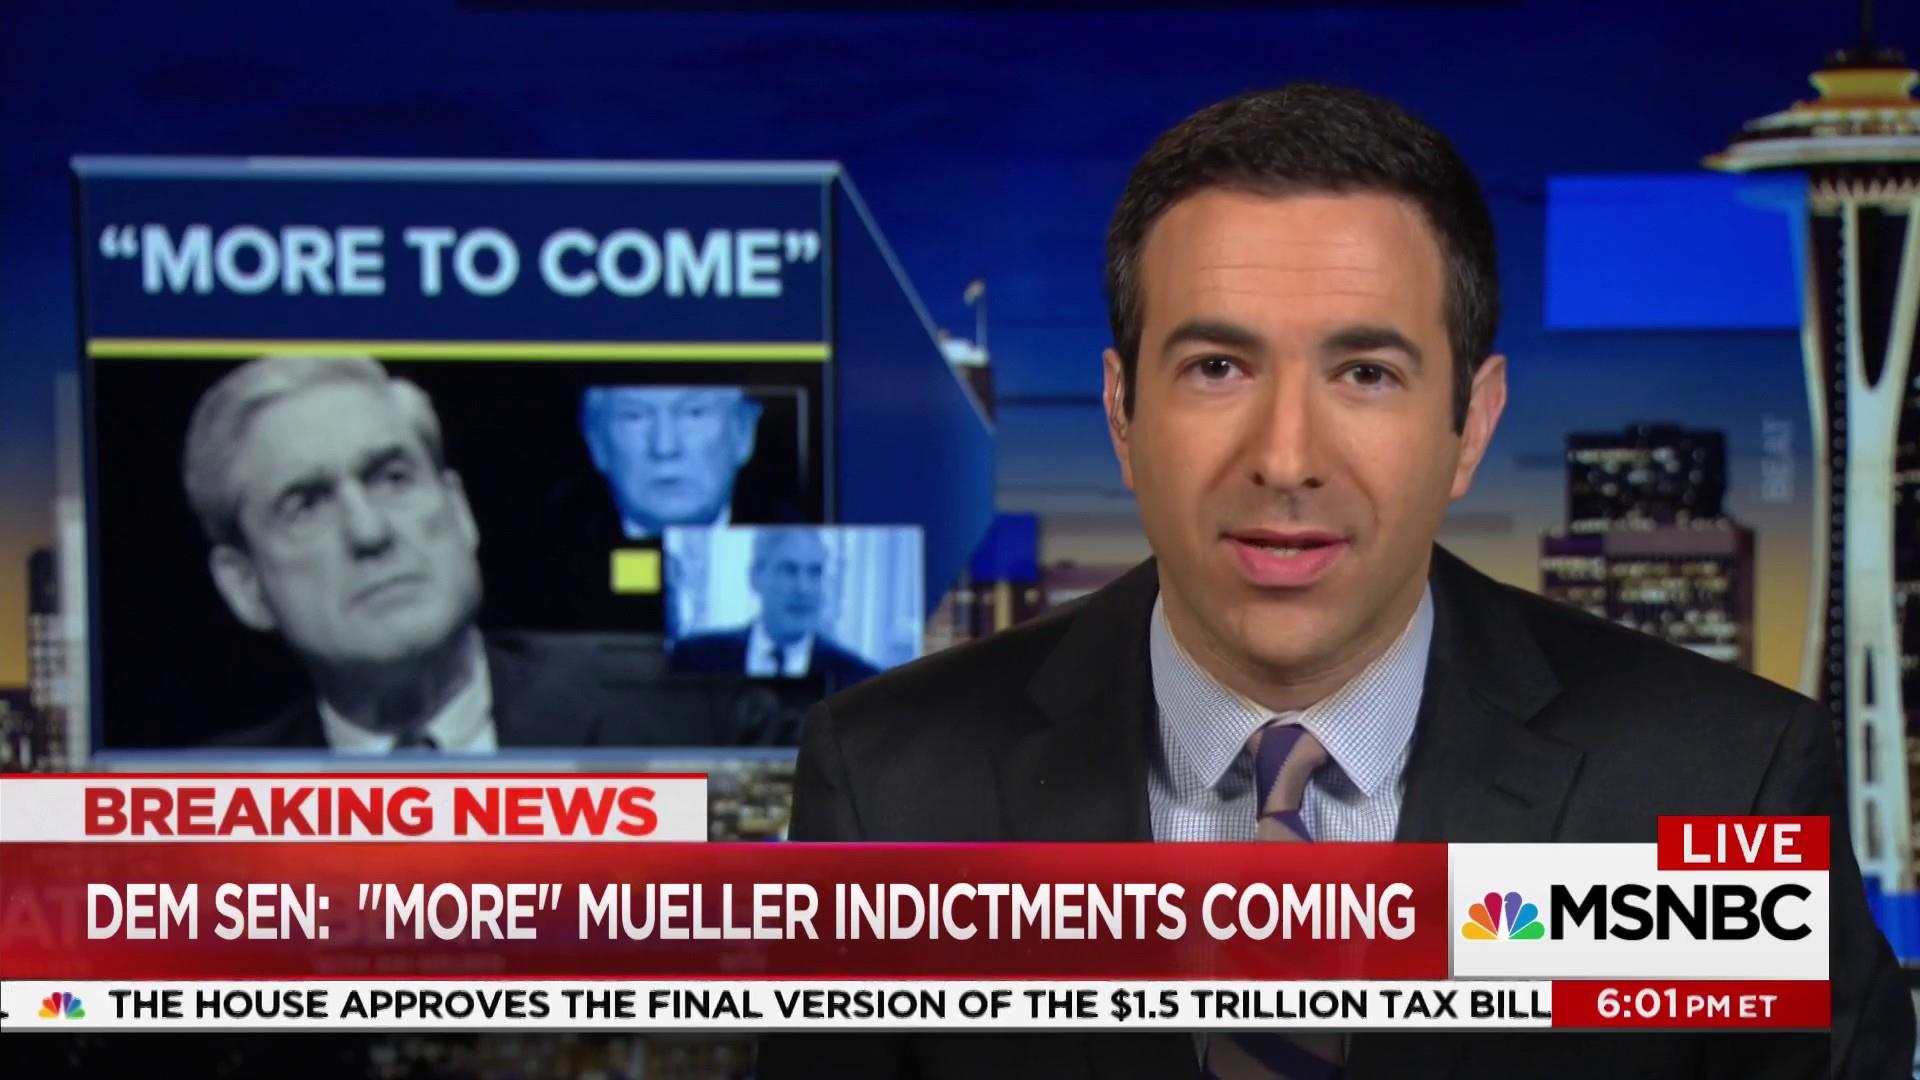 Warner: “More” Mueller indictments coming